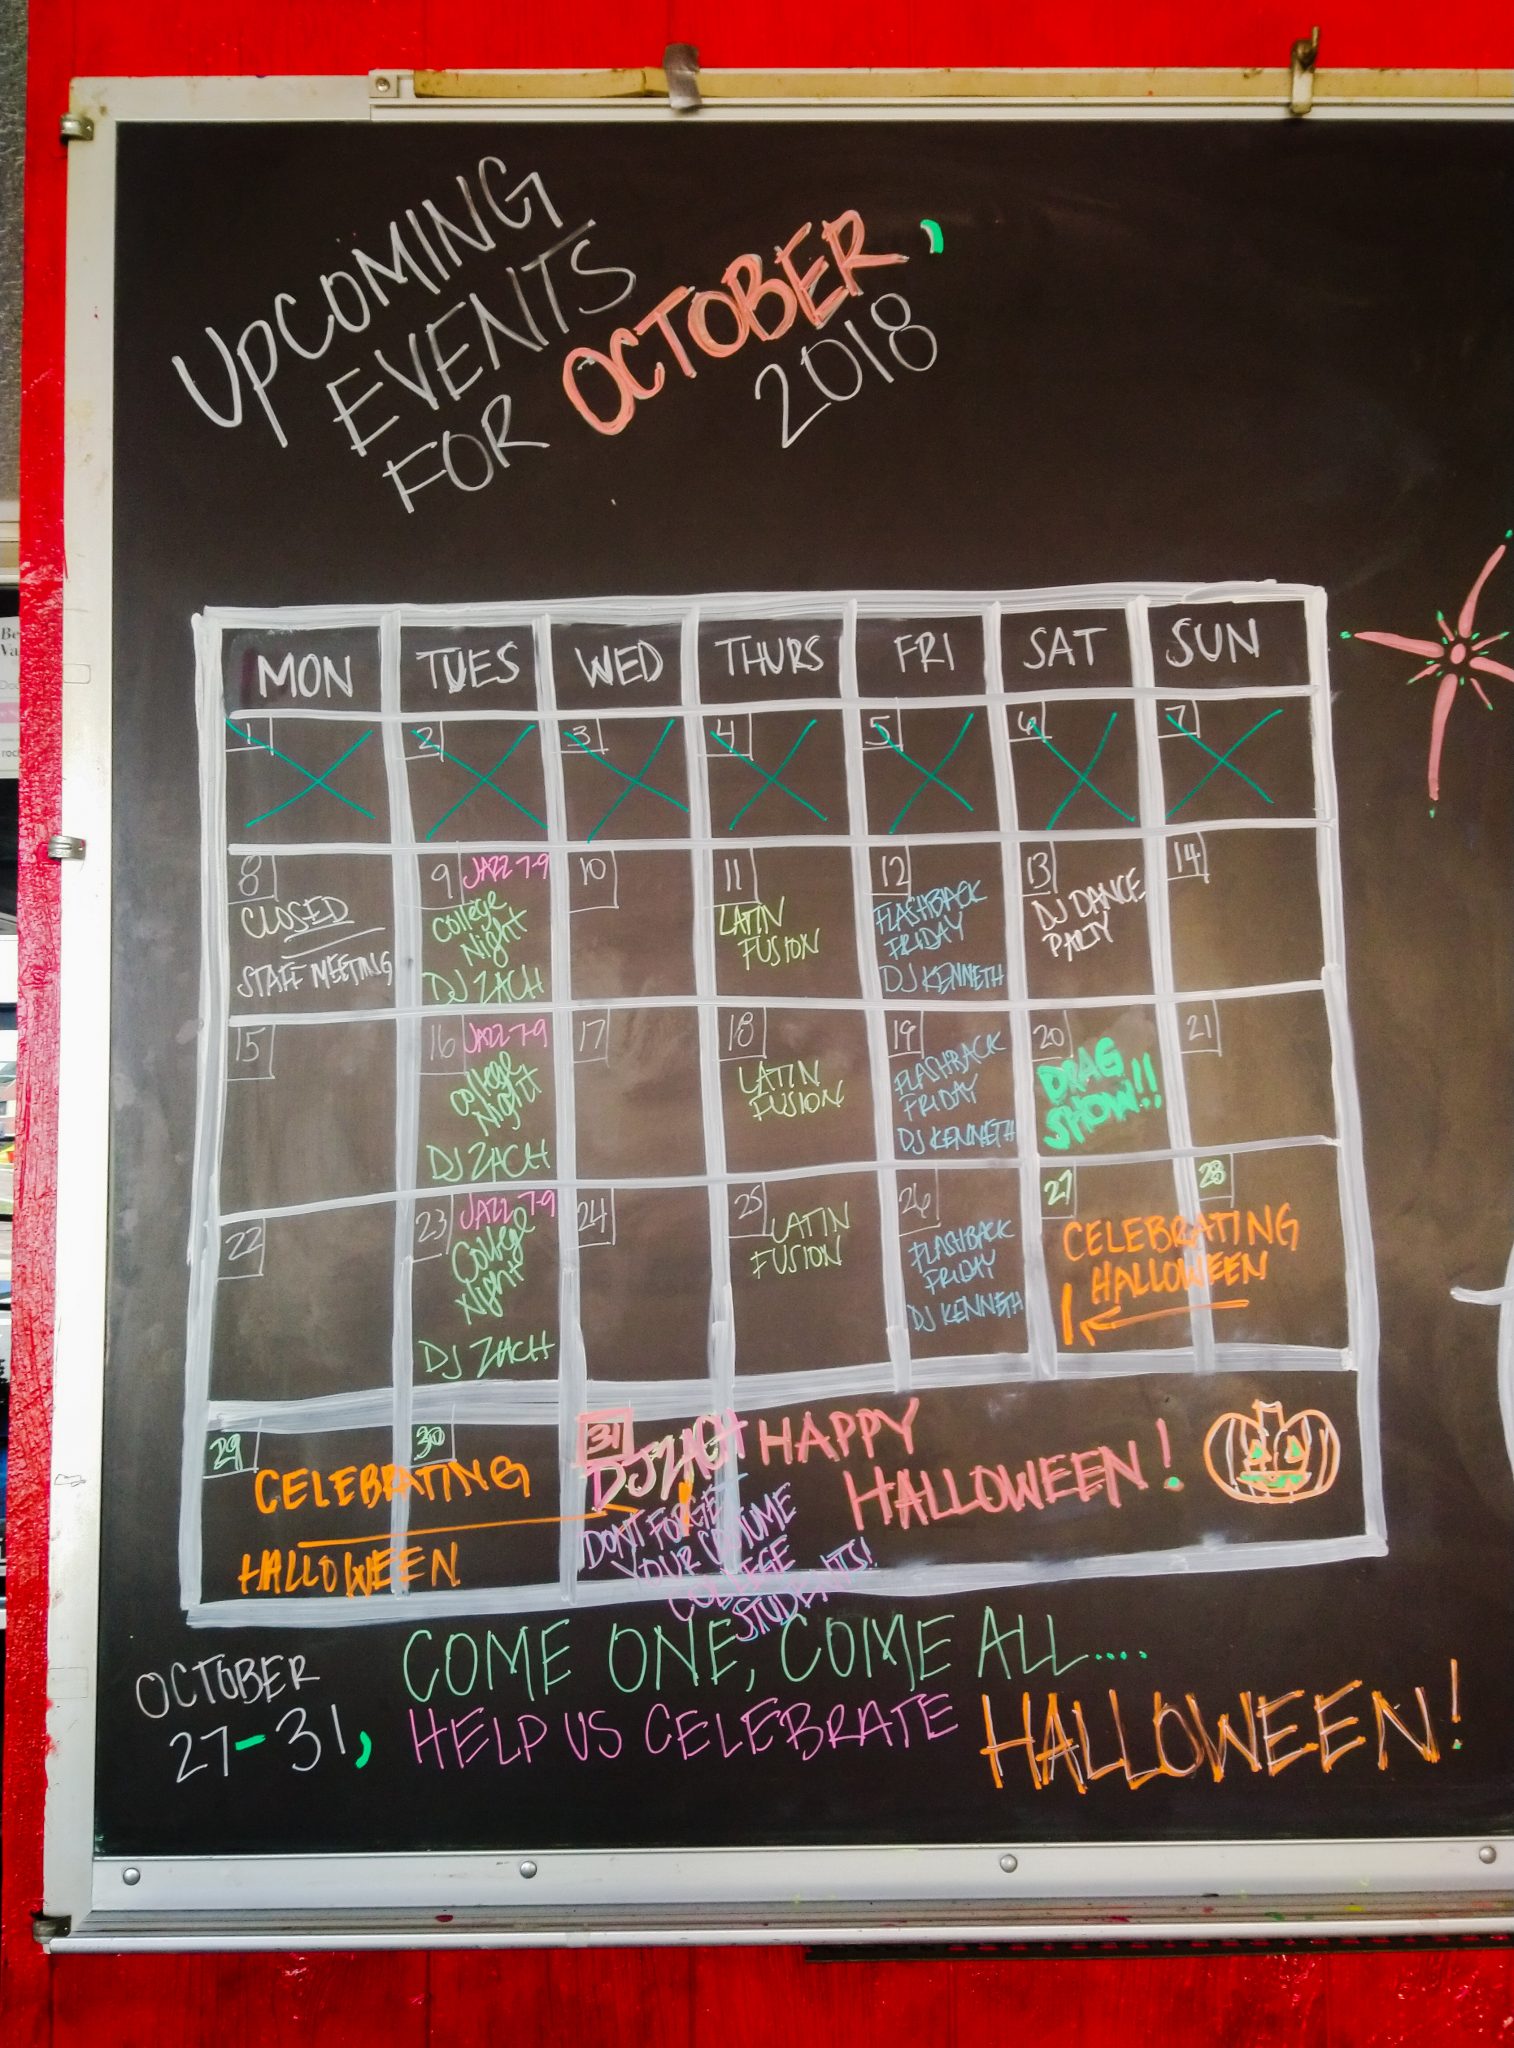 October 2018 events calendar Halloween